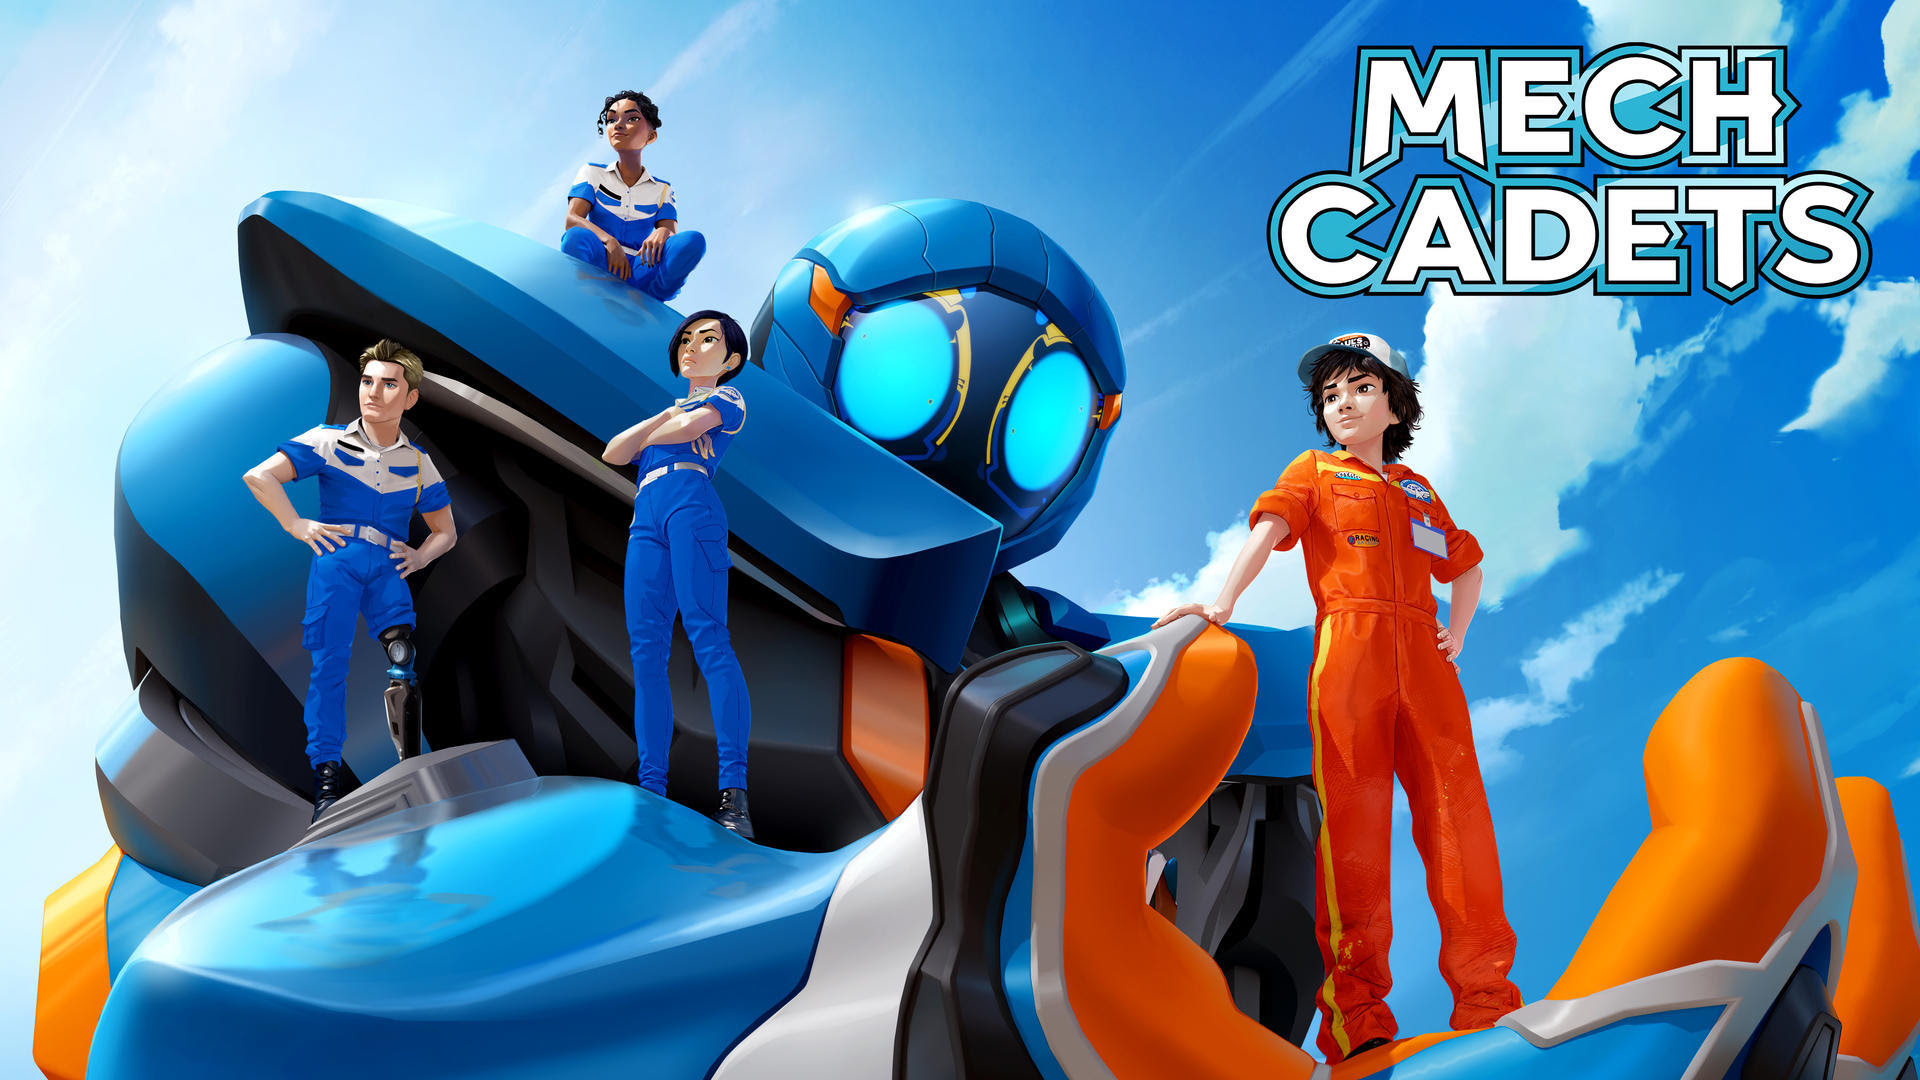 Netflix launching 'Mech Cadets' series based on BOOM! Studios comics series